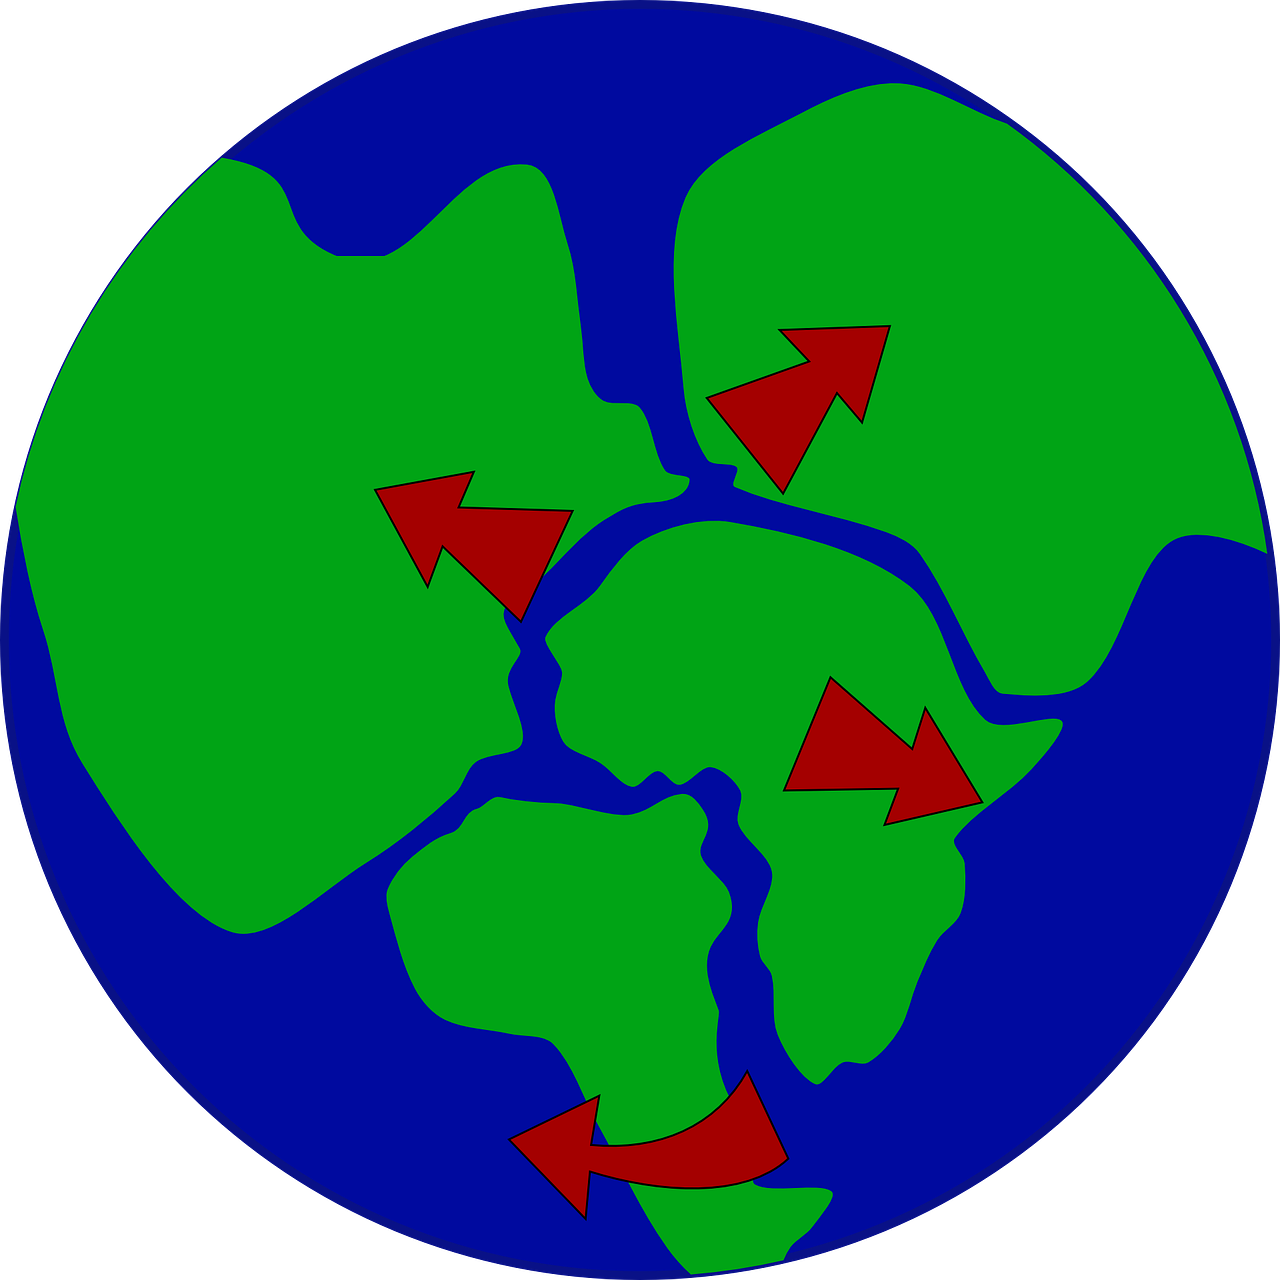 earth globe continents free photo